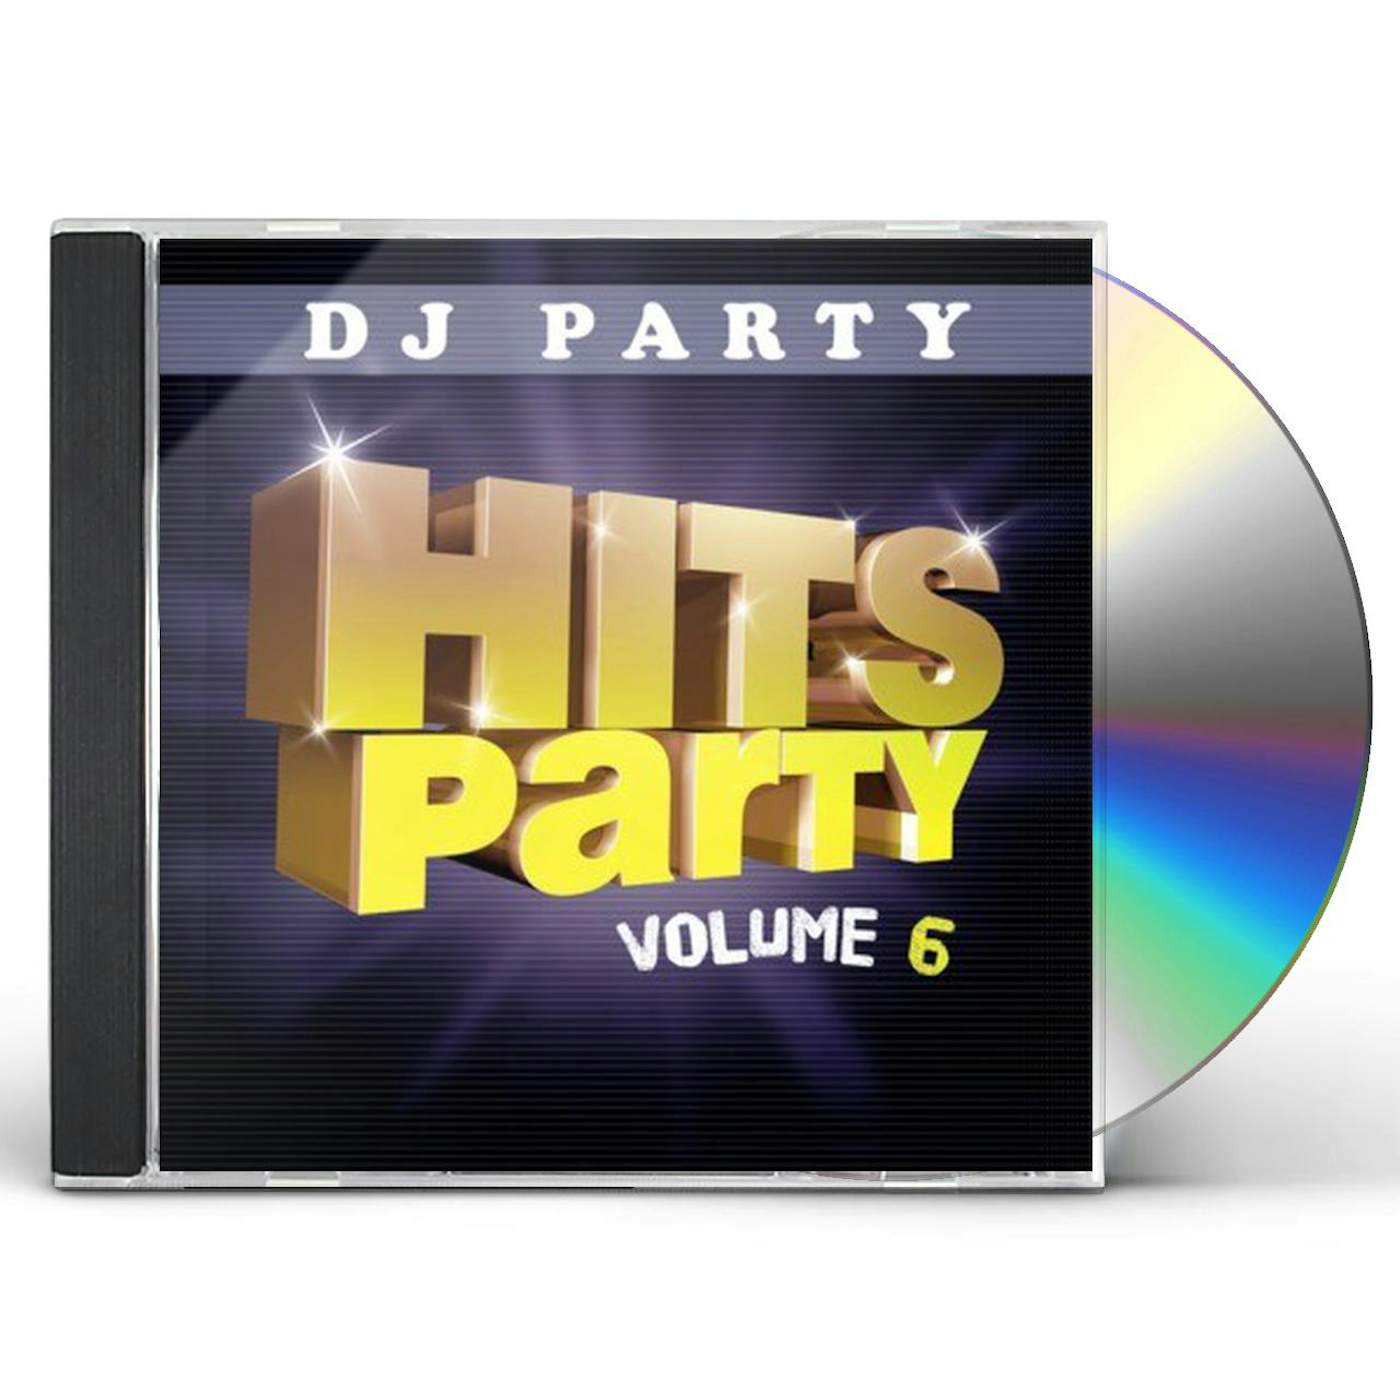 DJ Party HITS PARTY VOL. 6 CD